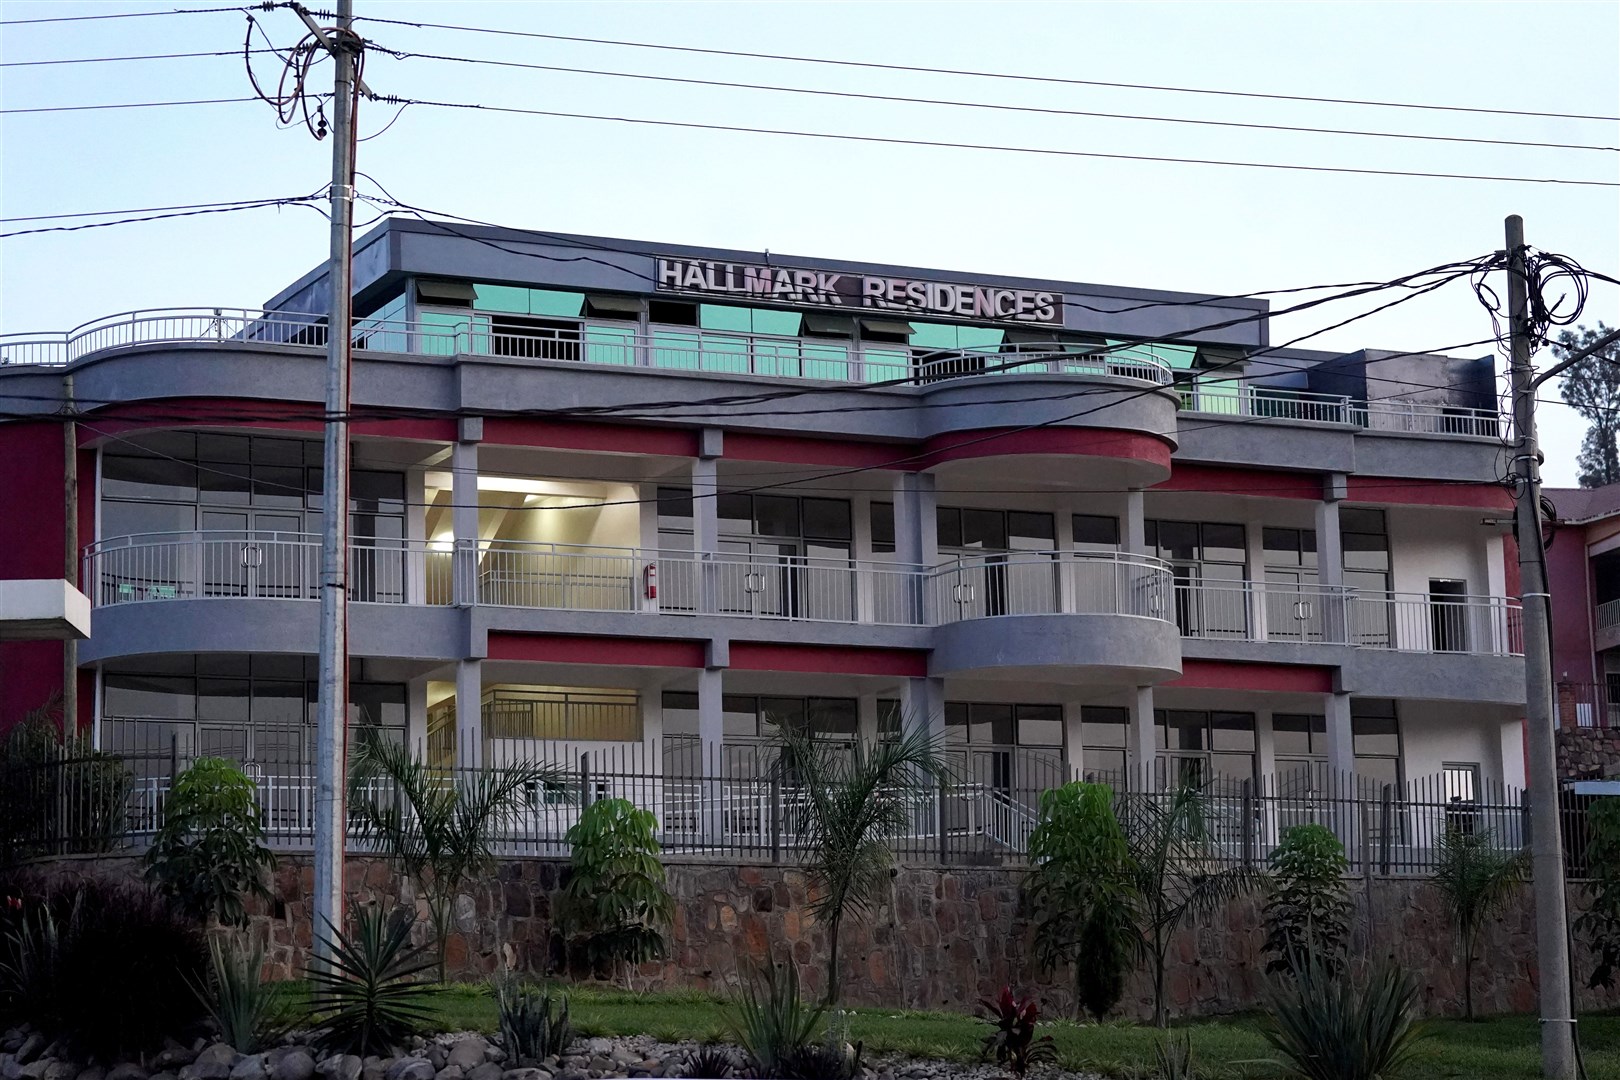 The Hallmark Residences Hotel in Kigali (Victoria Jones/PA)